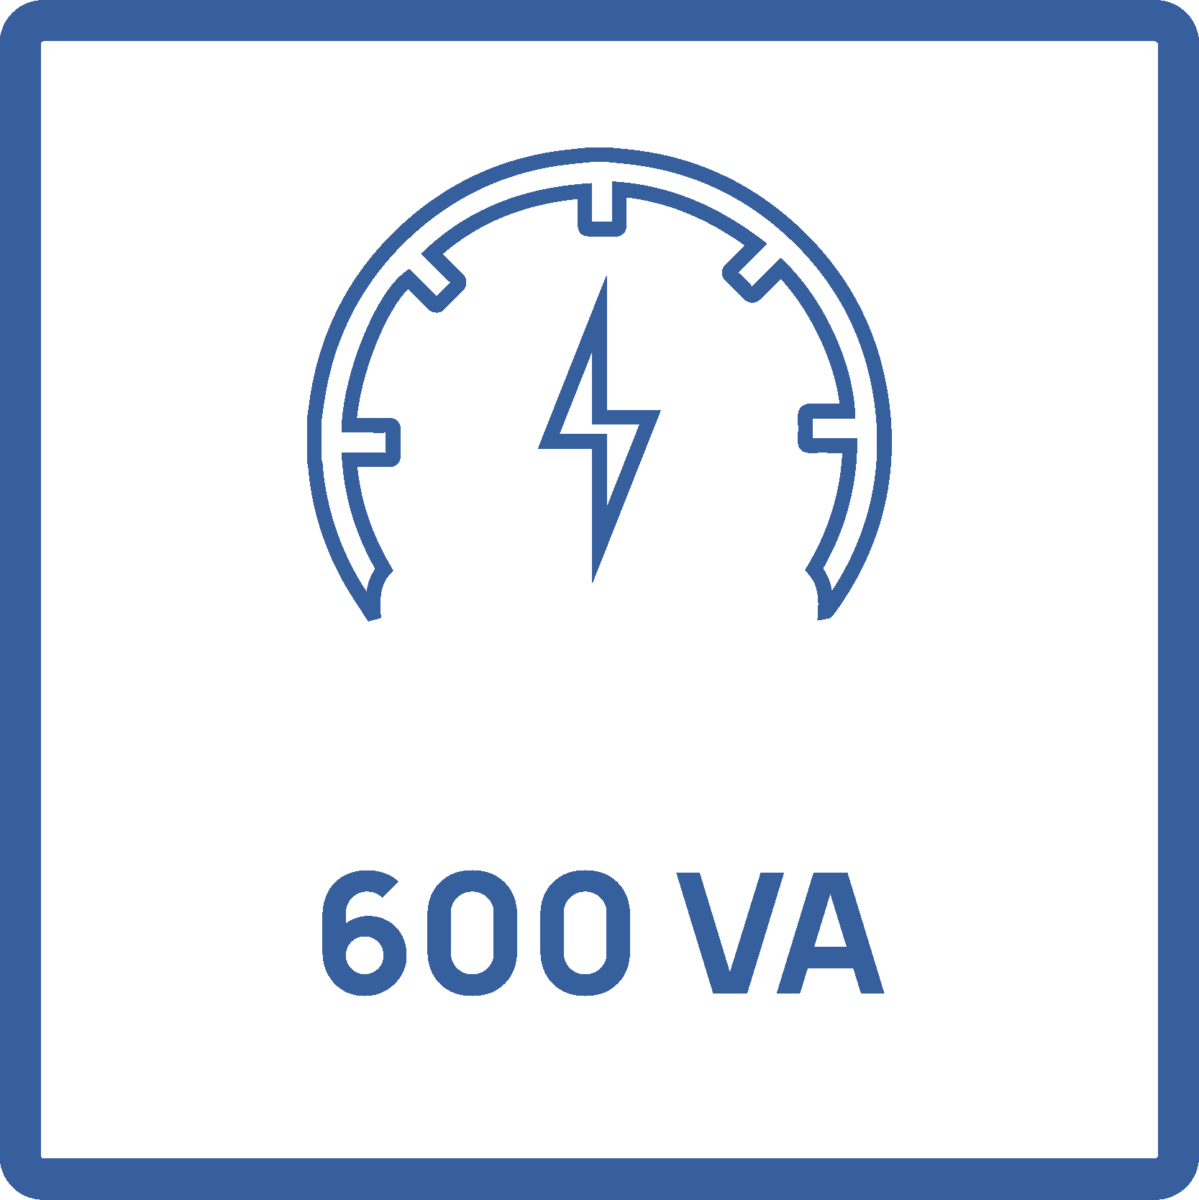 600 VA